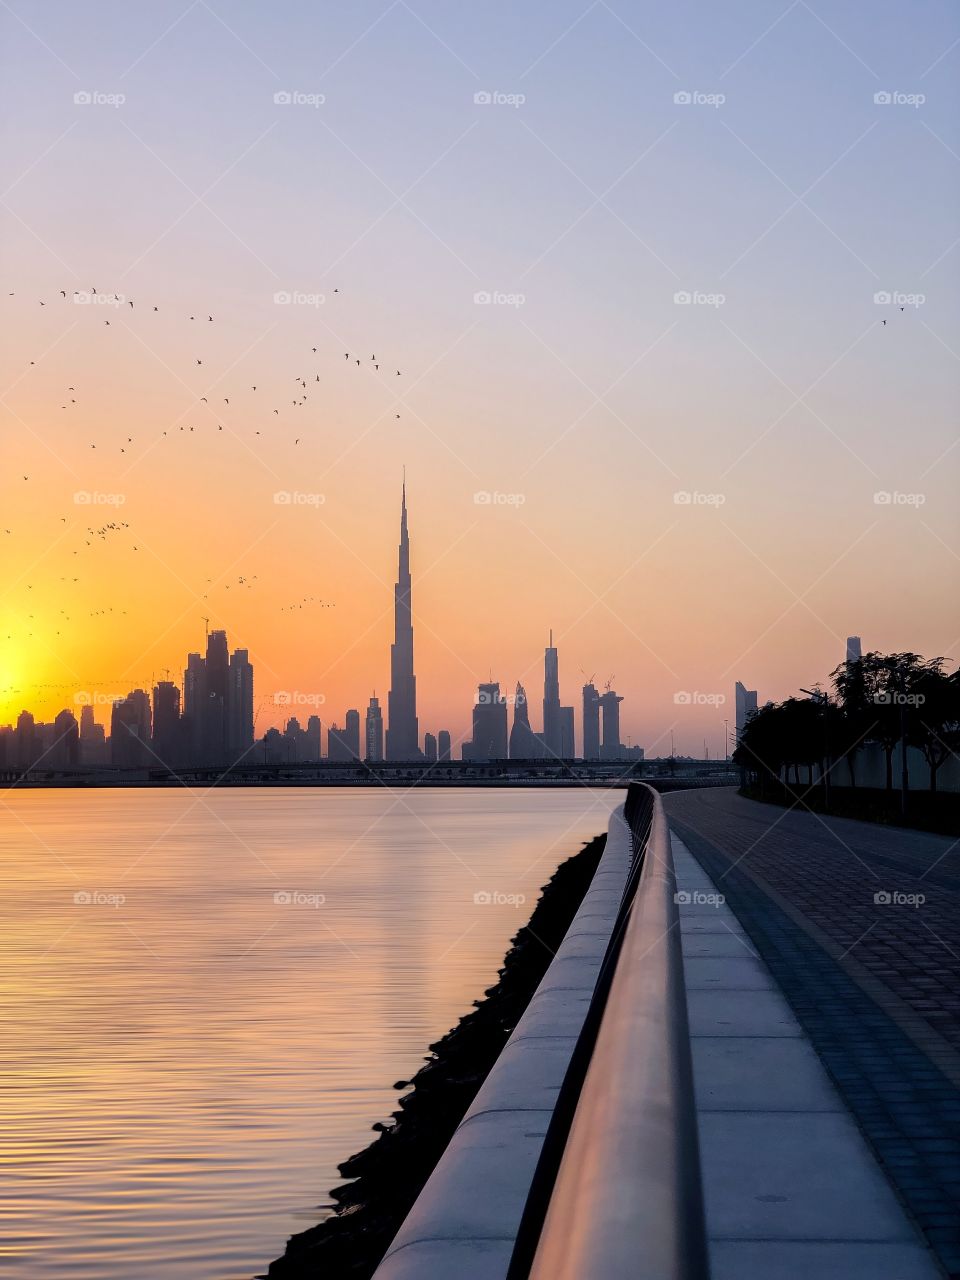 Dubai at sunset